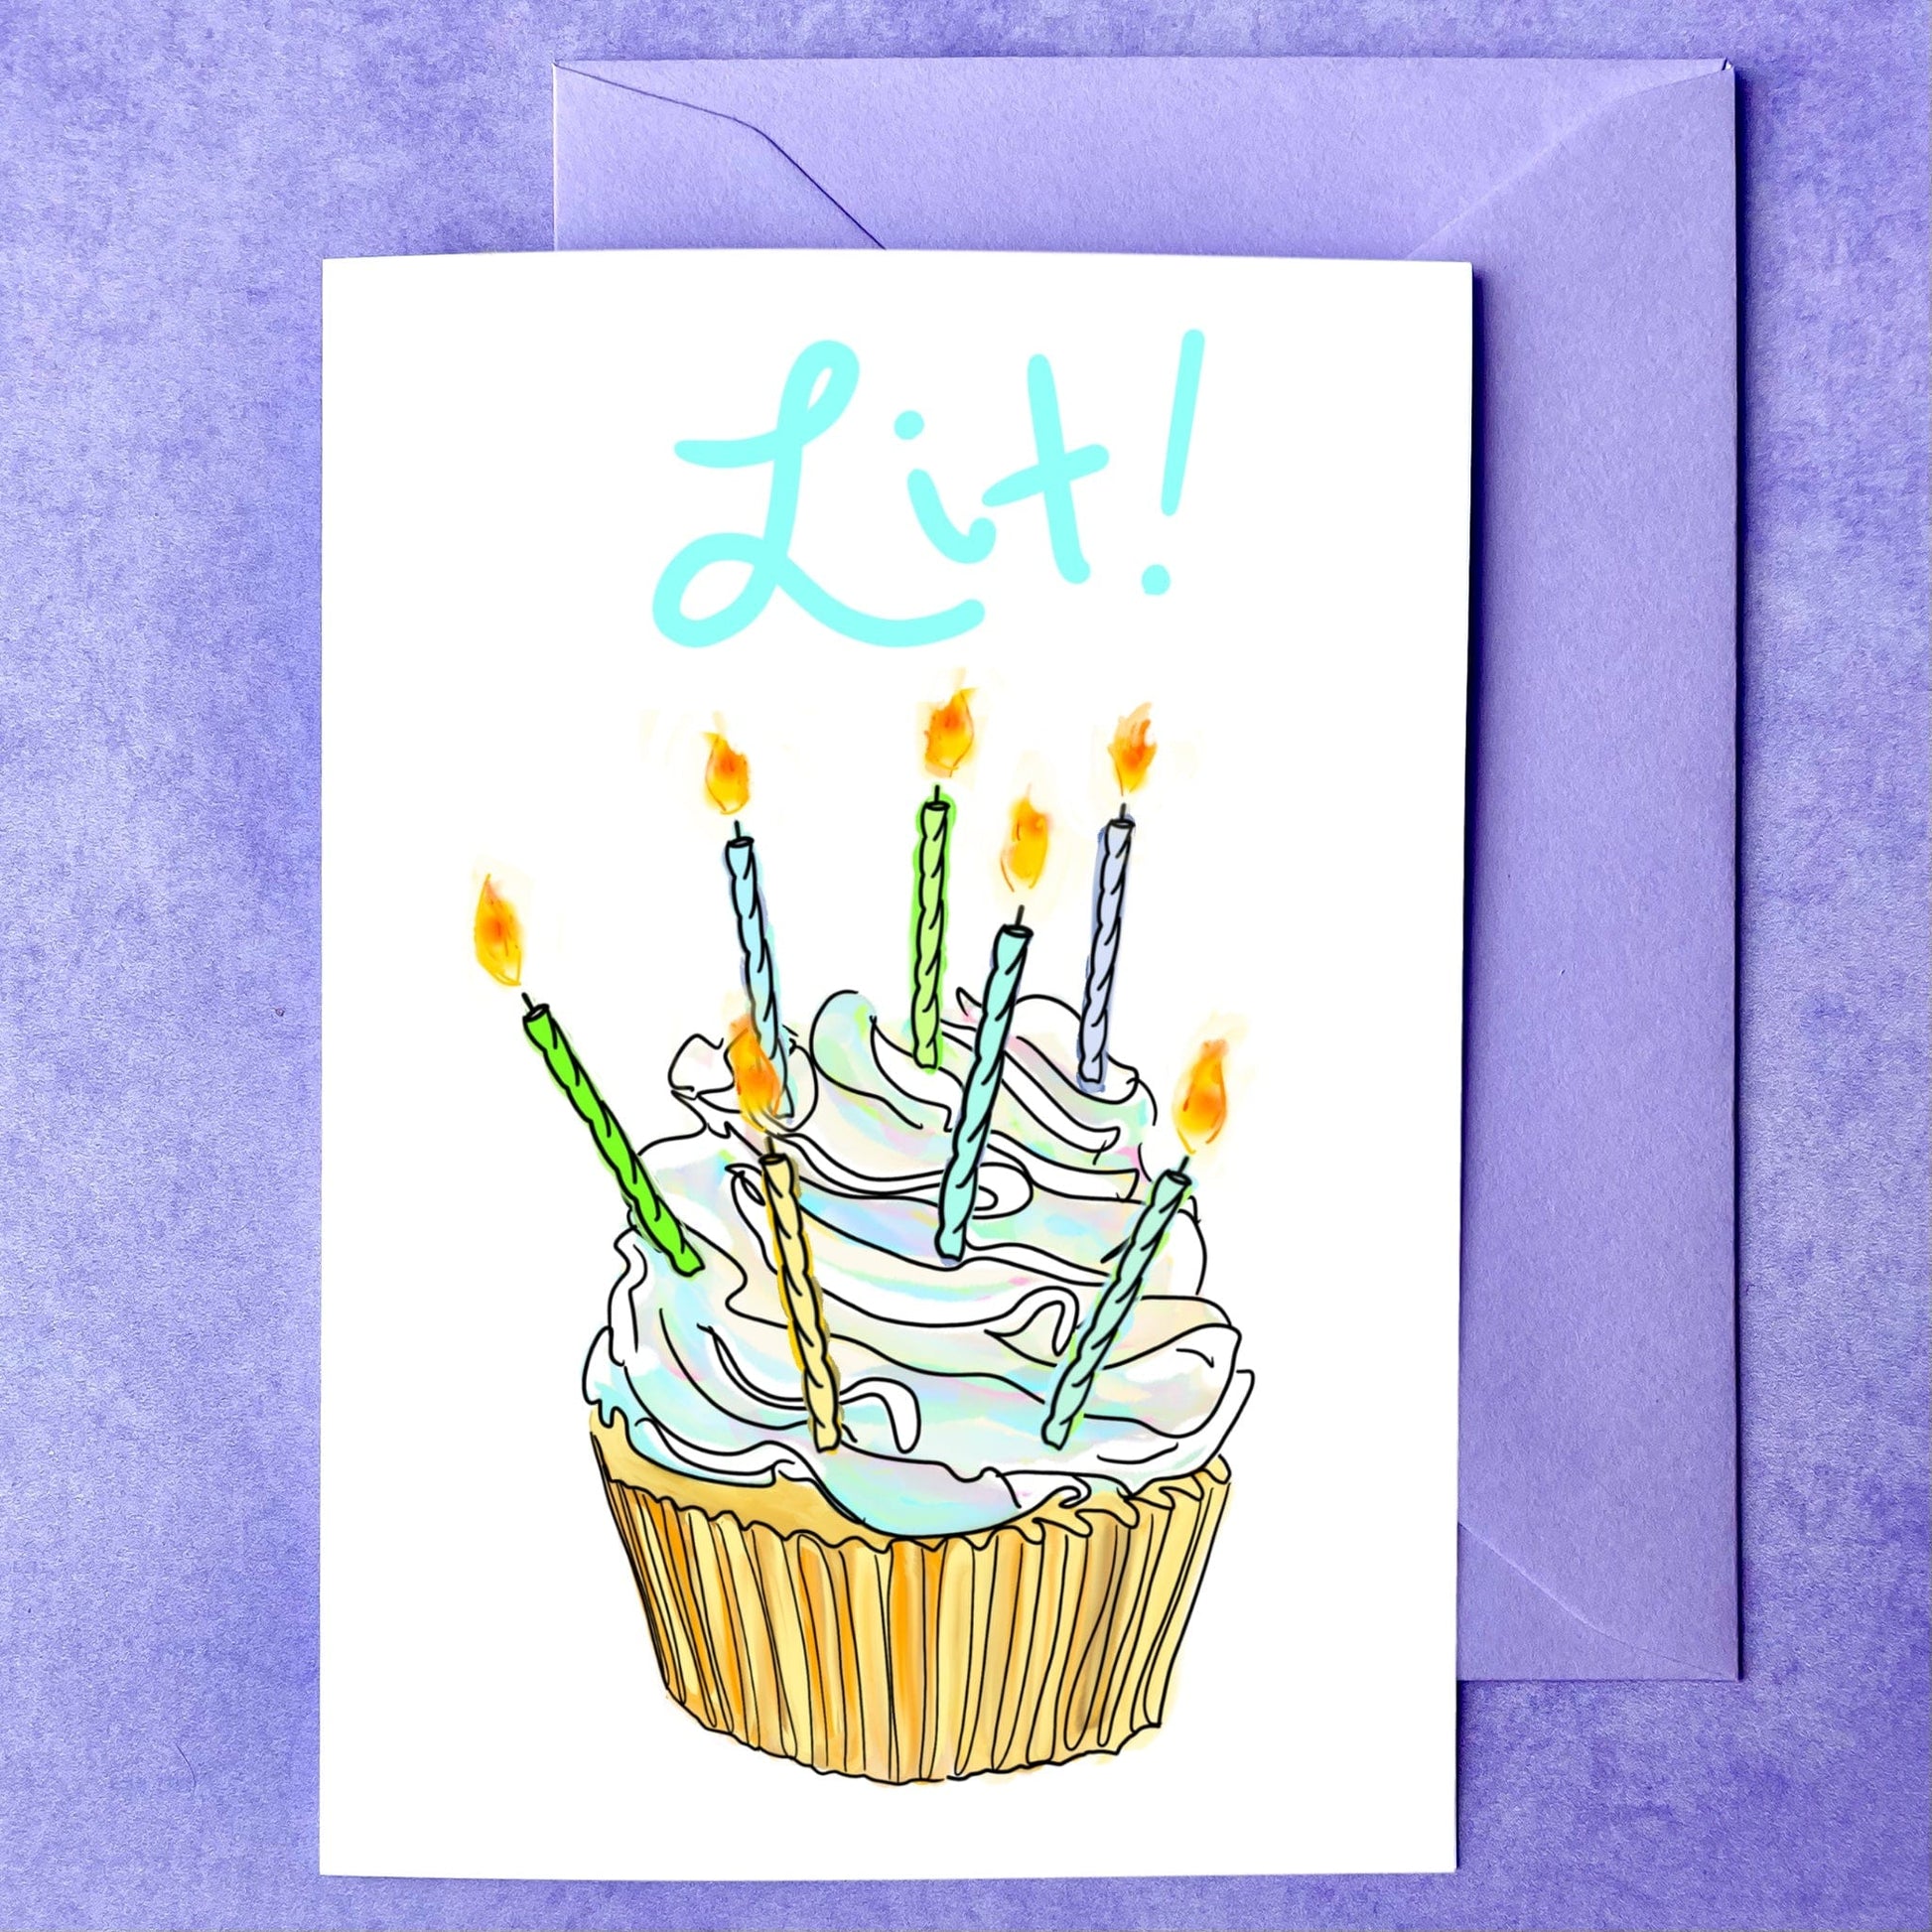 Maker Scholar It’s your birthday? Lit! | Birthday Card